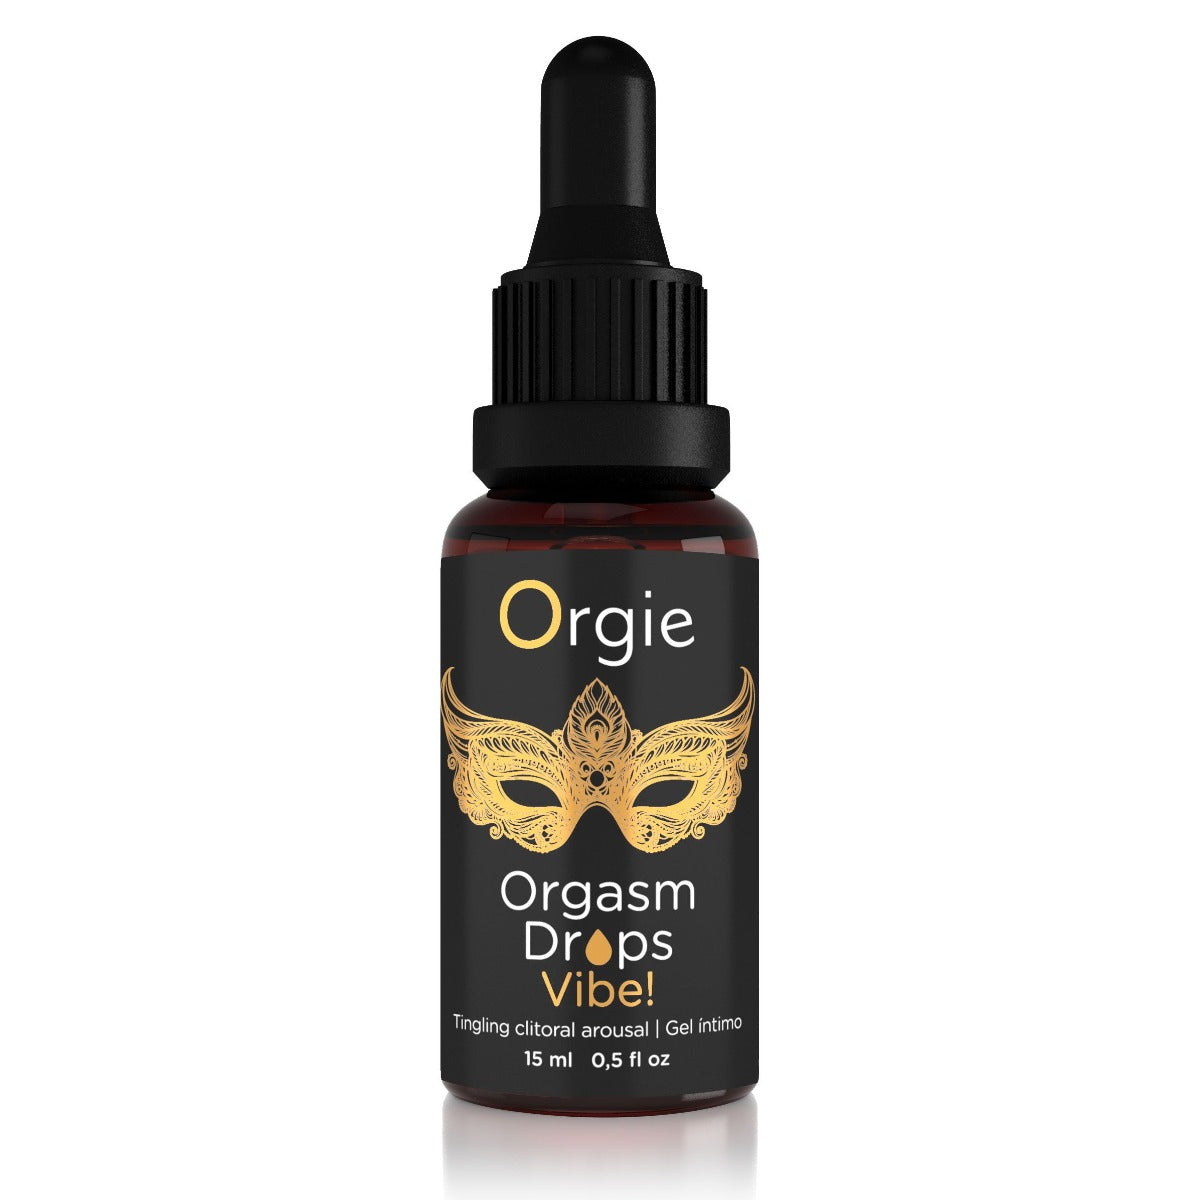 Orgie Orgasm Drops - Vibe! - Tingling Clitoral Arousal Serum - UABDSM